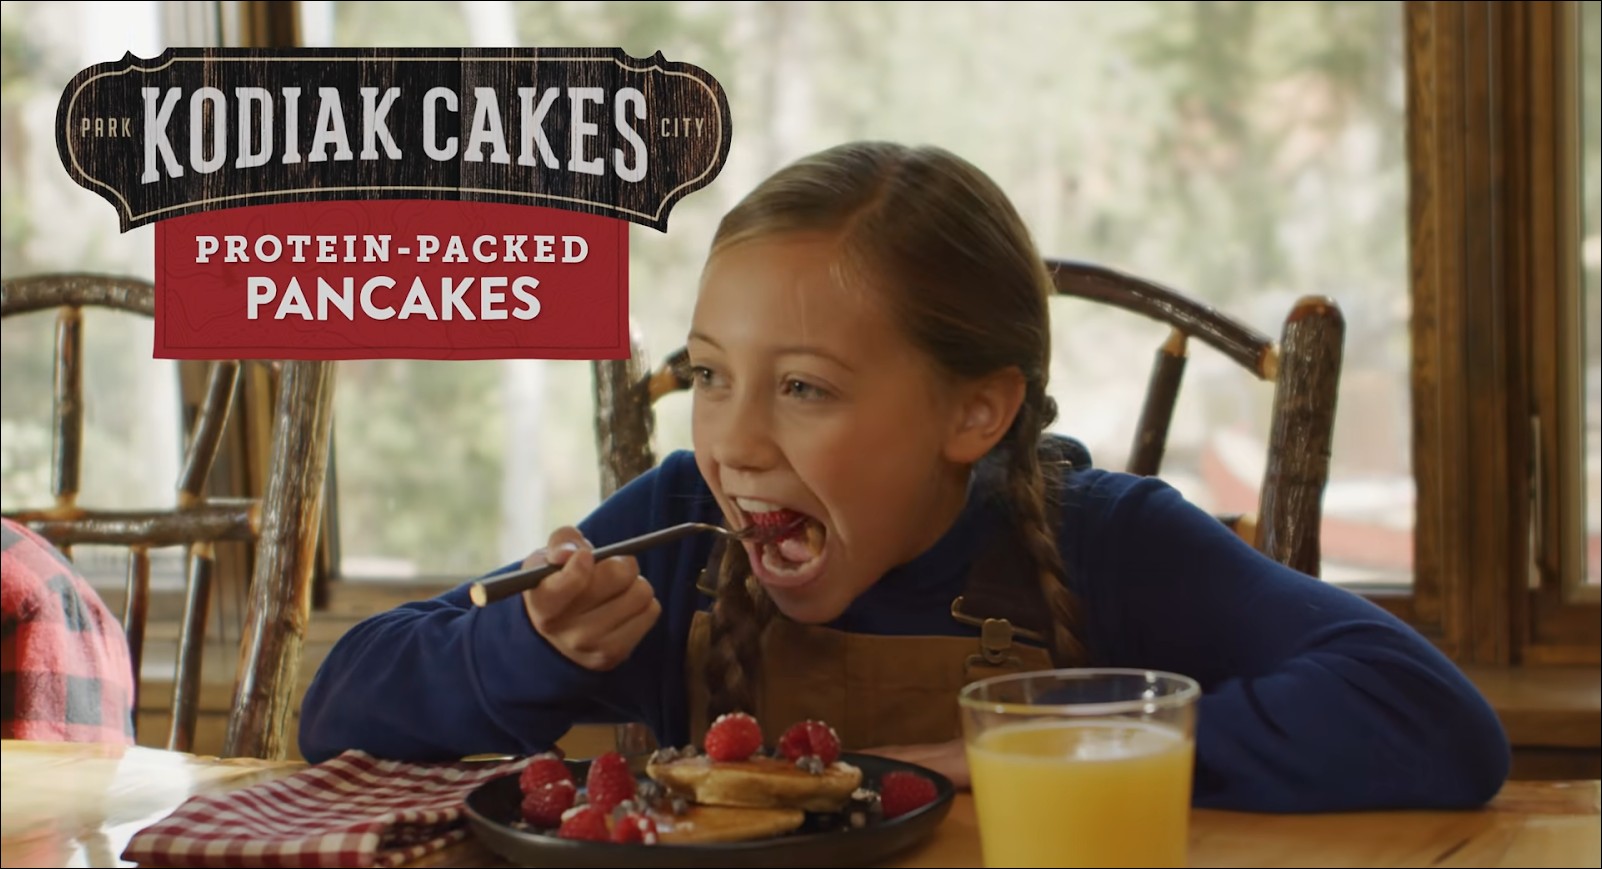 Kodiak Cakes Videomarketingstrategie